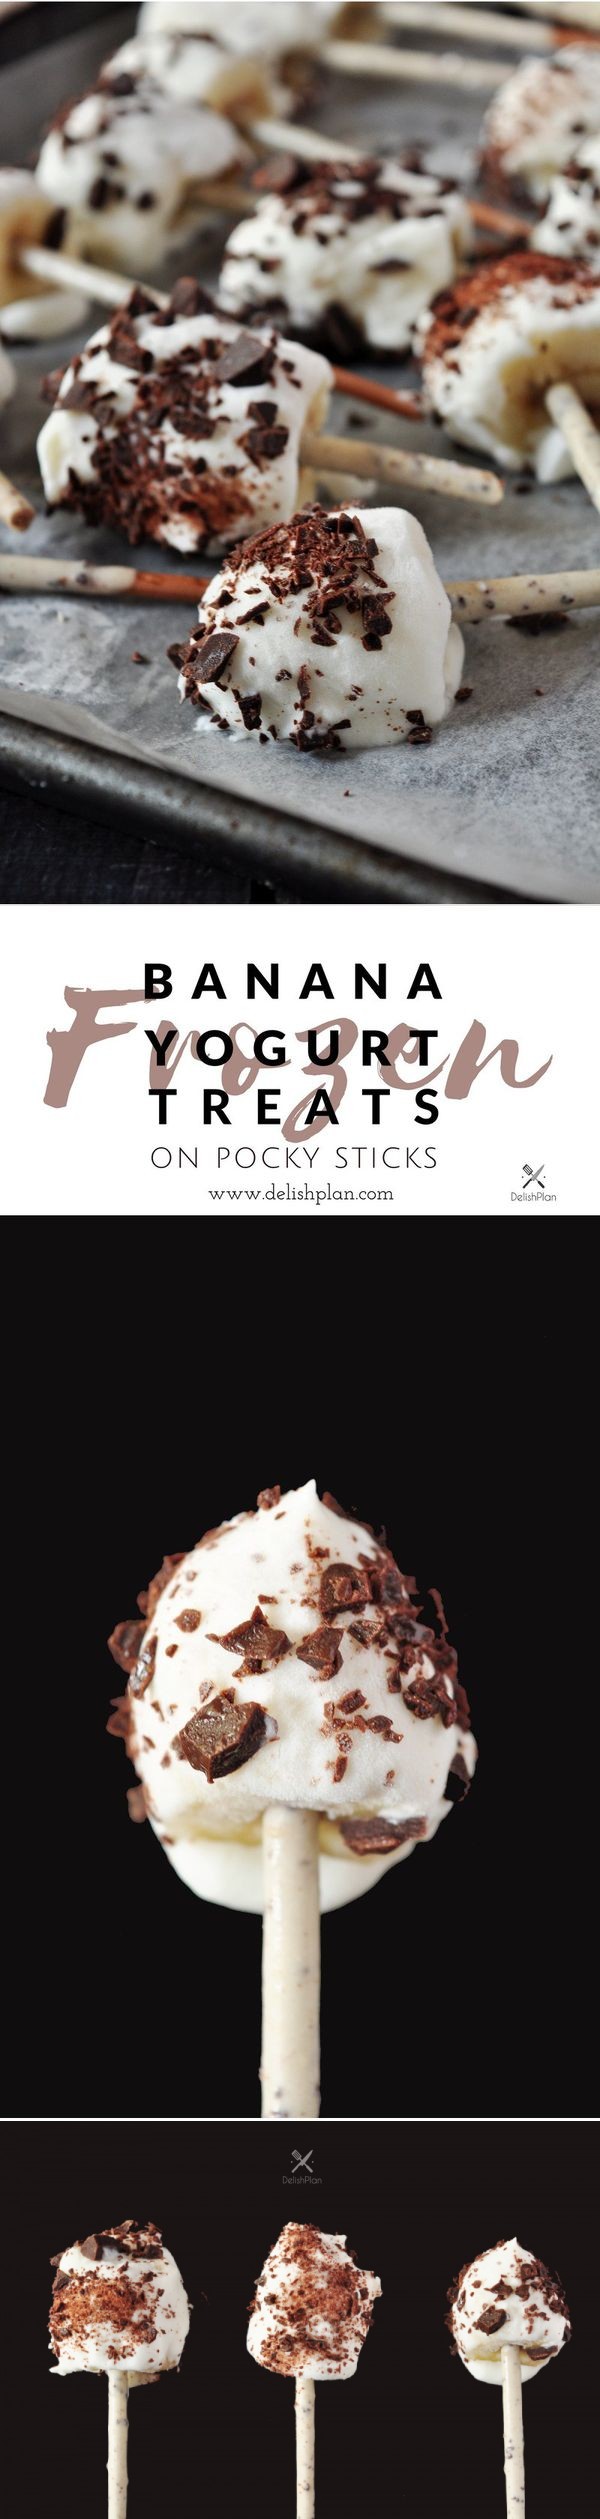 Banana Yogurt Frozen Treats on Pocky Sticks